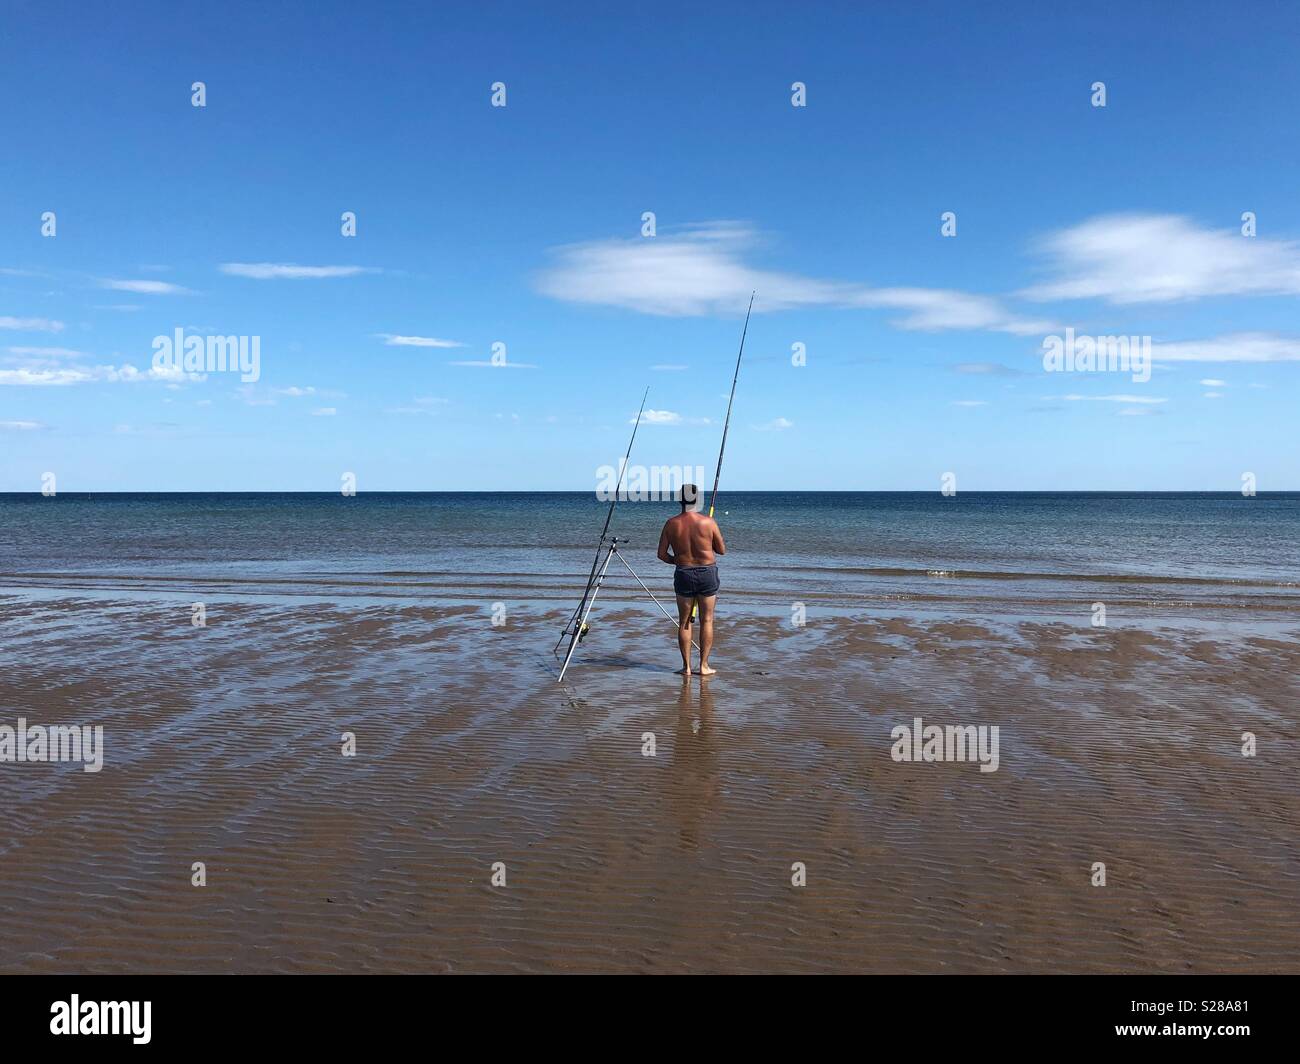 A man fishing at the beach Stock Photo